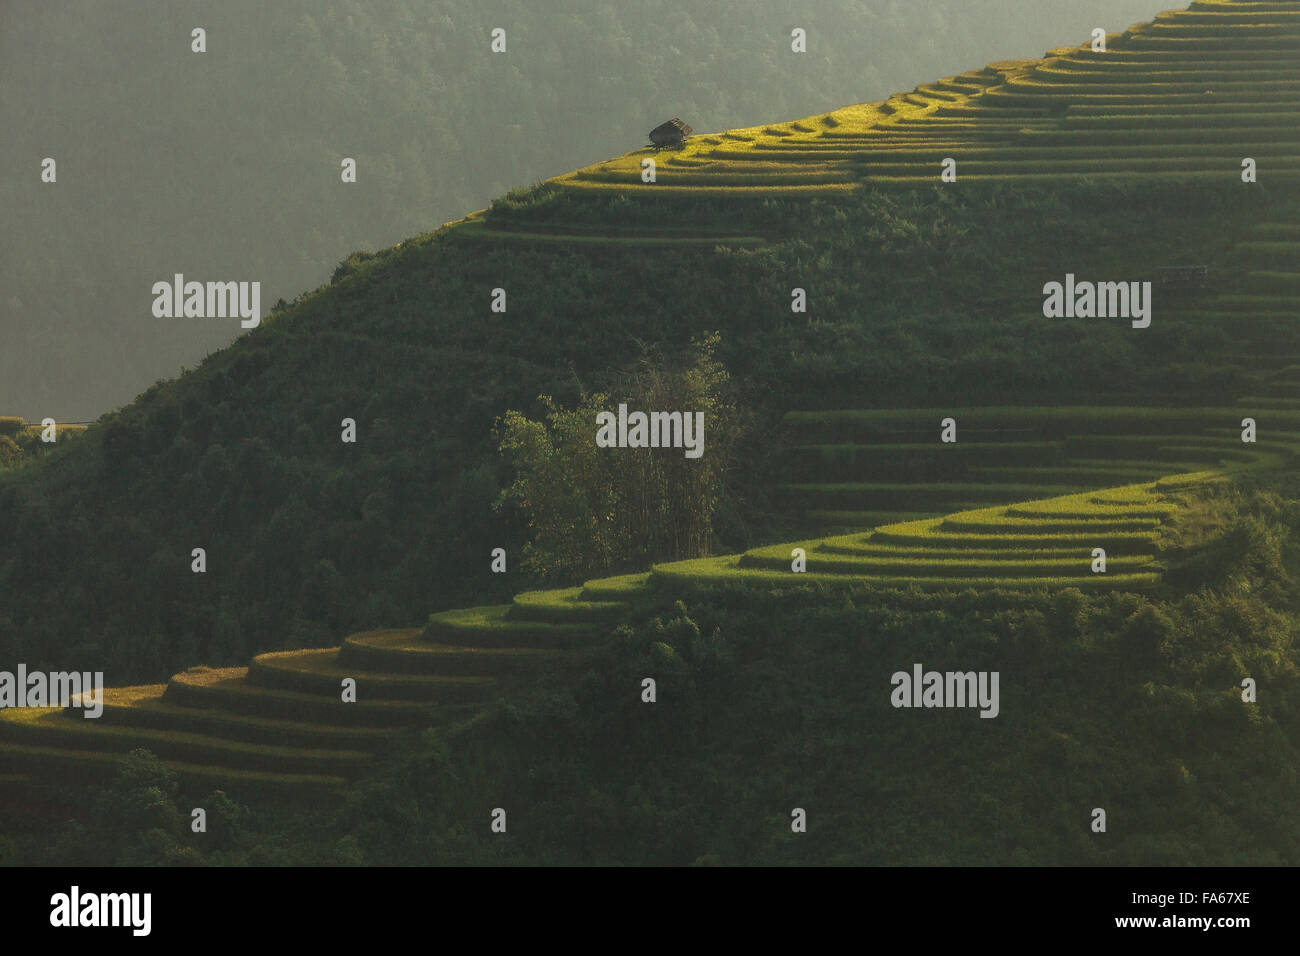 Rice terraces, Yenbai, Vietnam Stock Photo